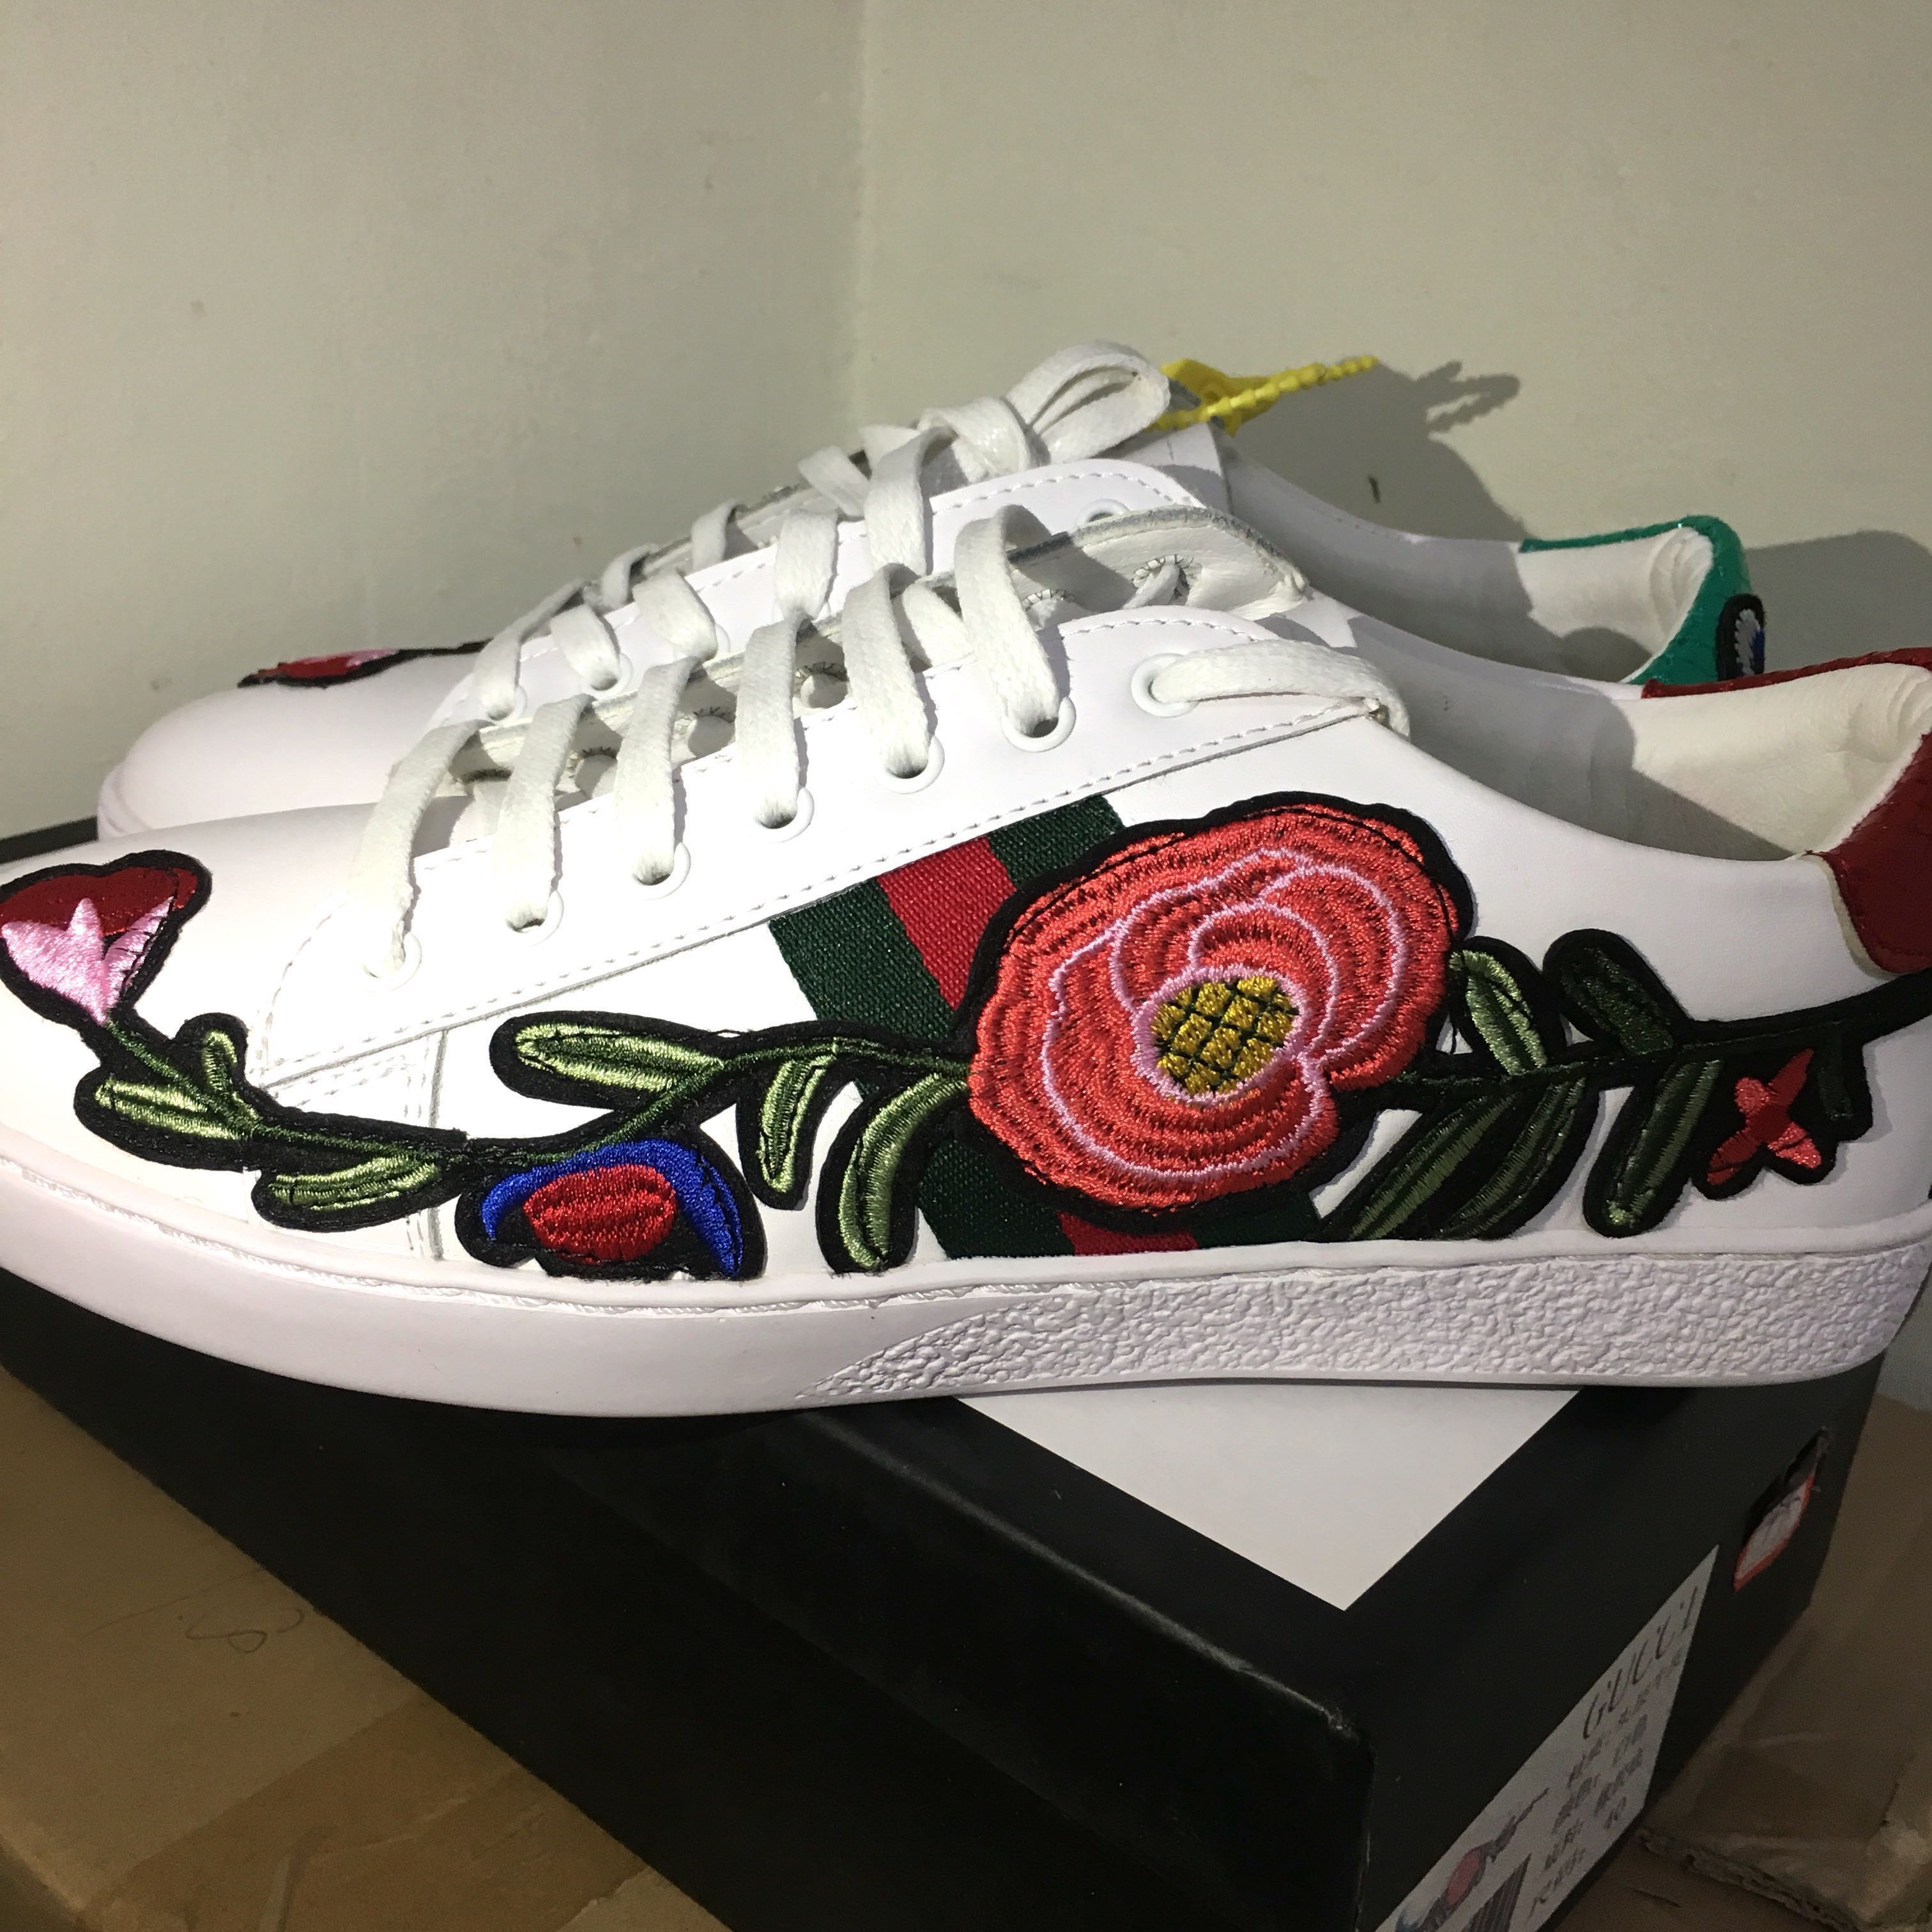 gucci rose sneakers